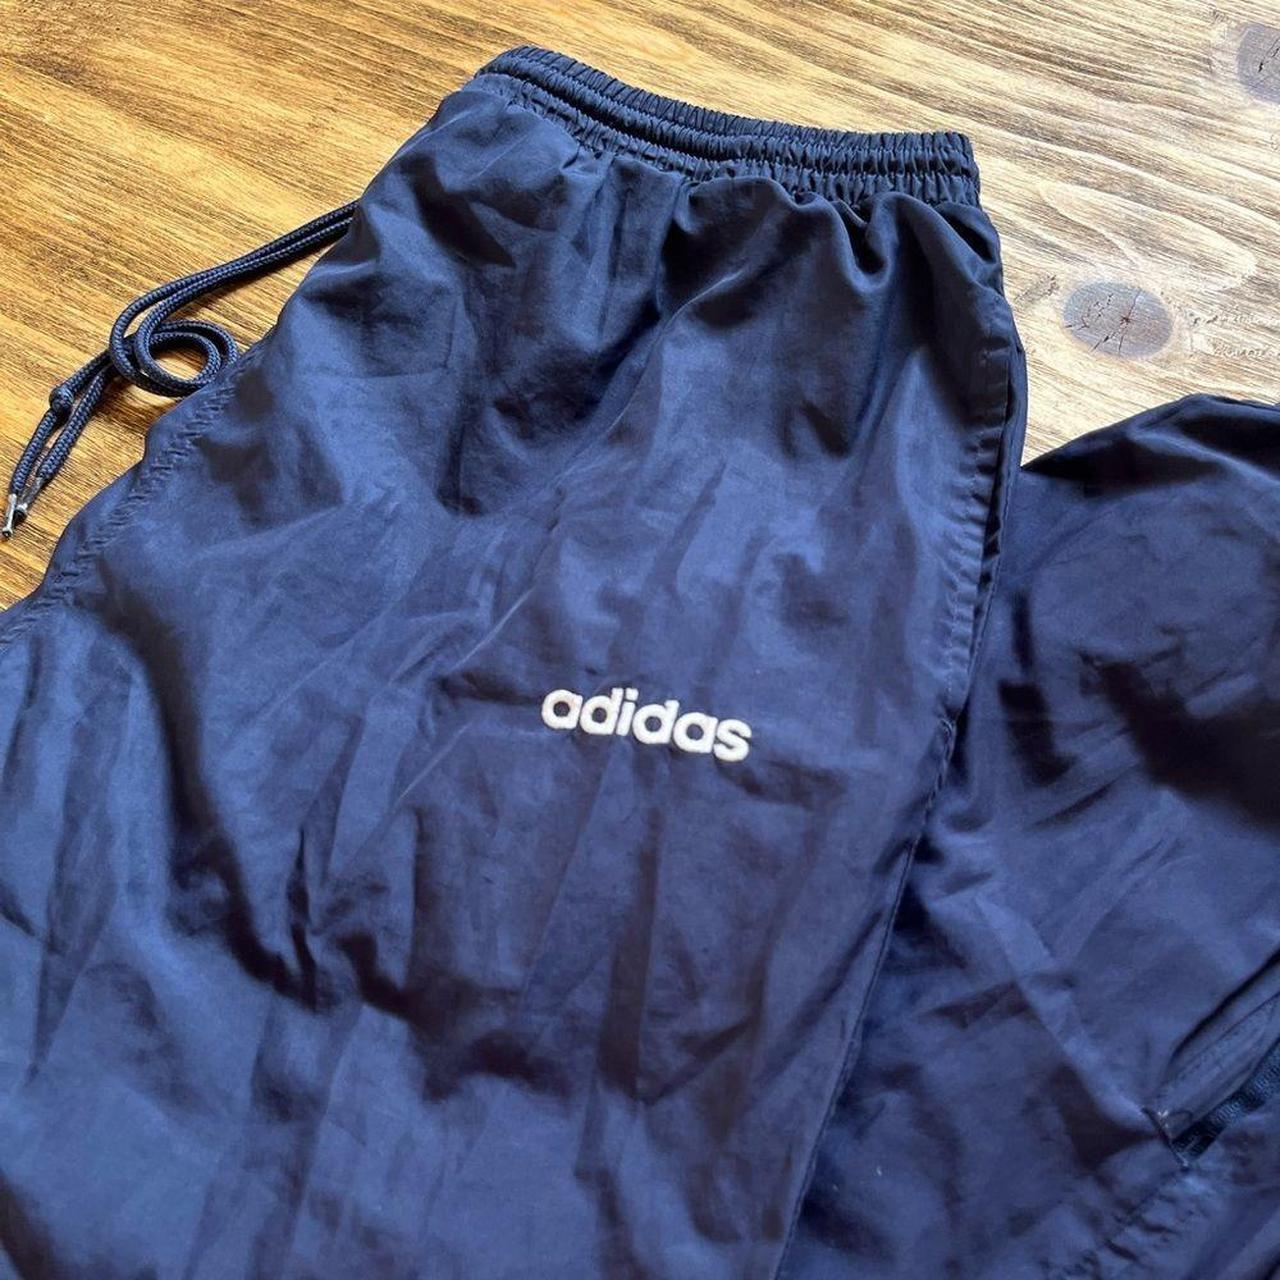 Product Image 4 - Item: Adidas Vintage Sweatpants
Size: Medium